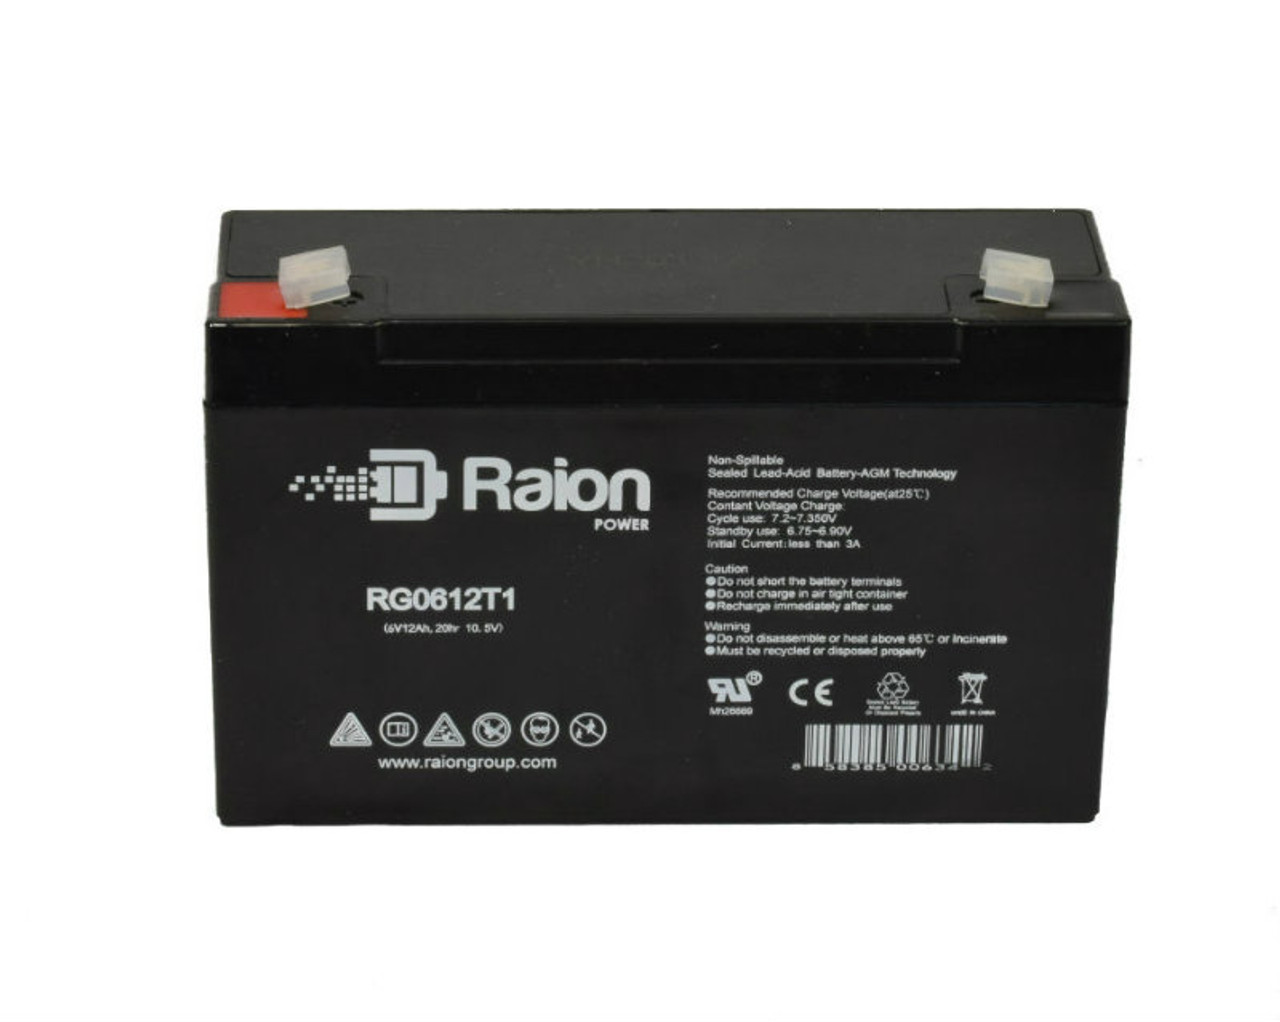 Raion Power RG06120T1 SLA Battery for Medi-Man Rehabilitation Patient Lift 62200-400 LB